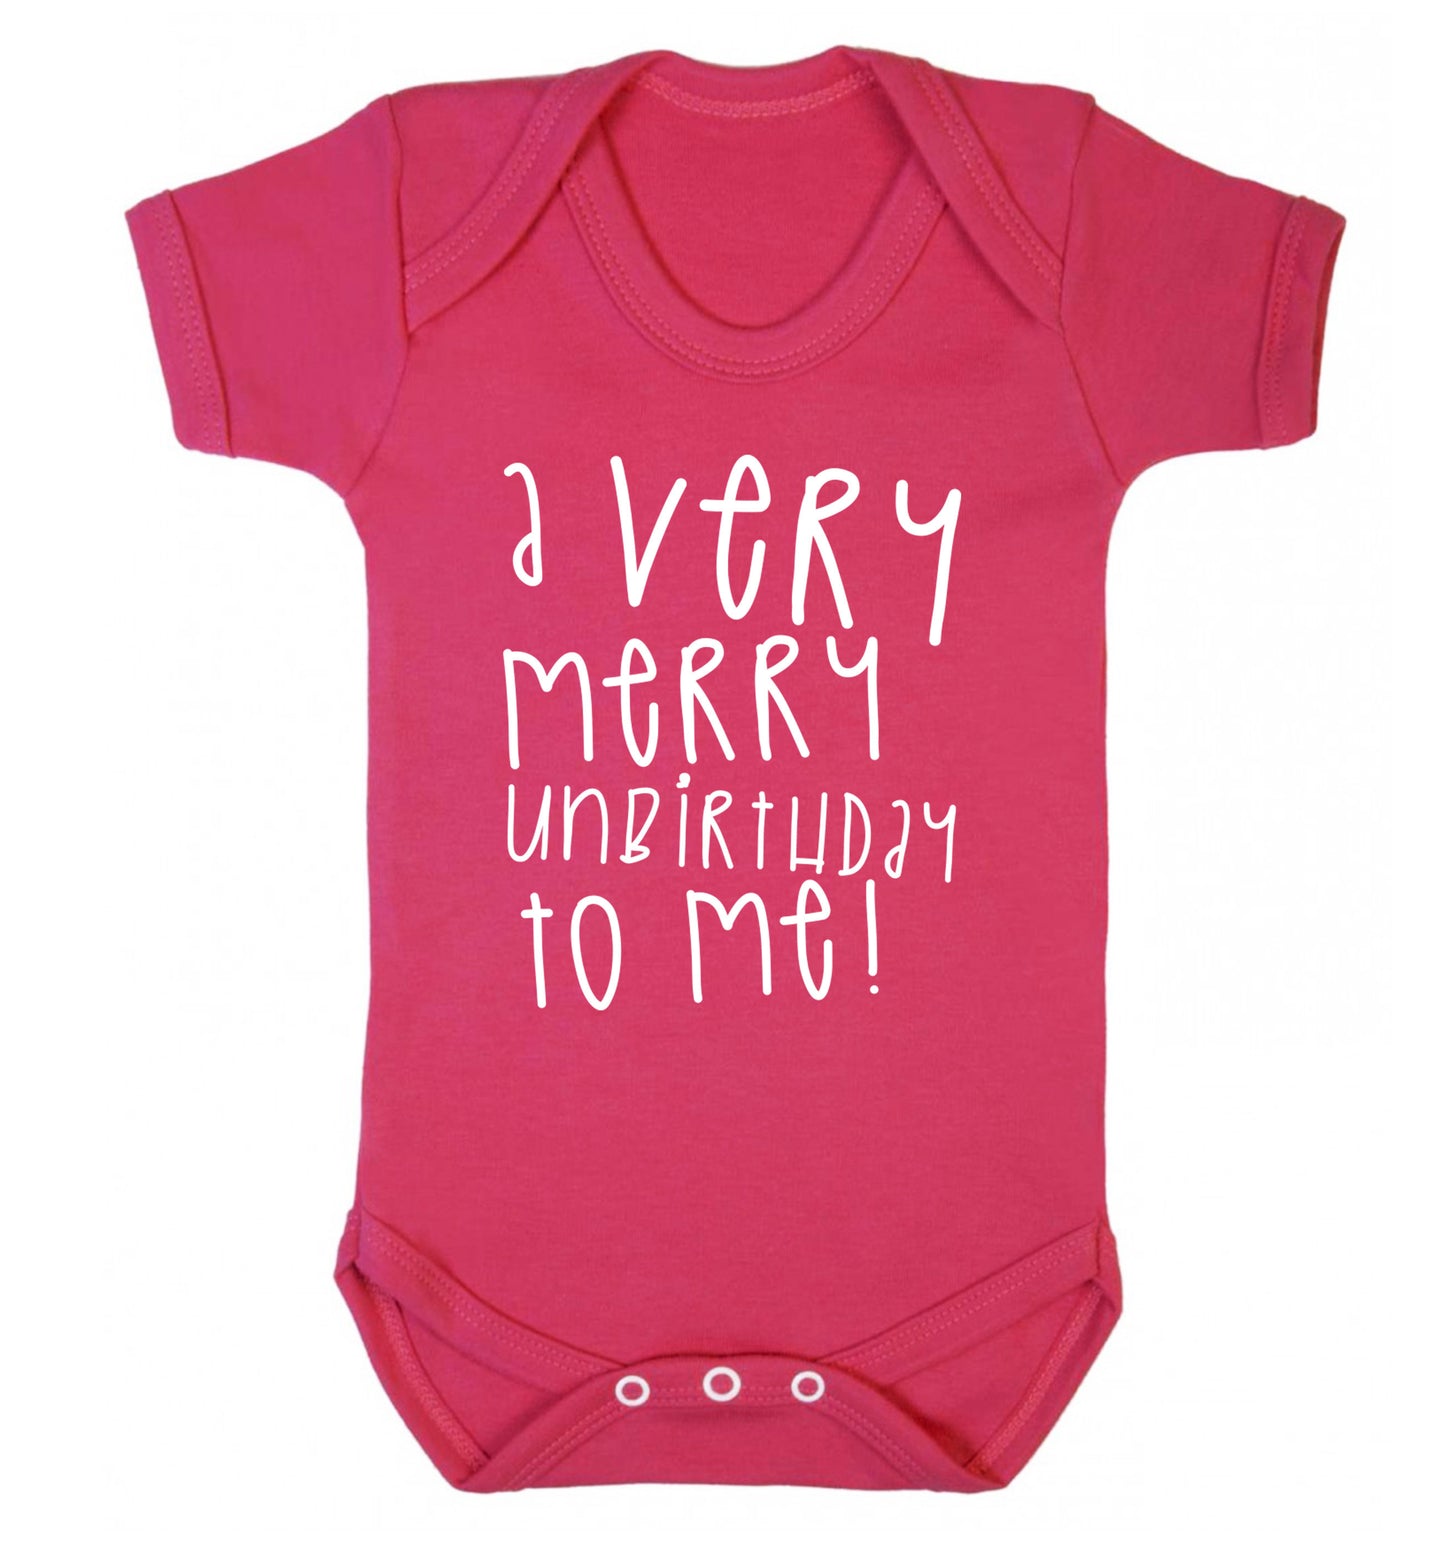 A very merry unbirthday to me! Baby Vest dark pink 18-24 months